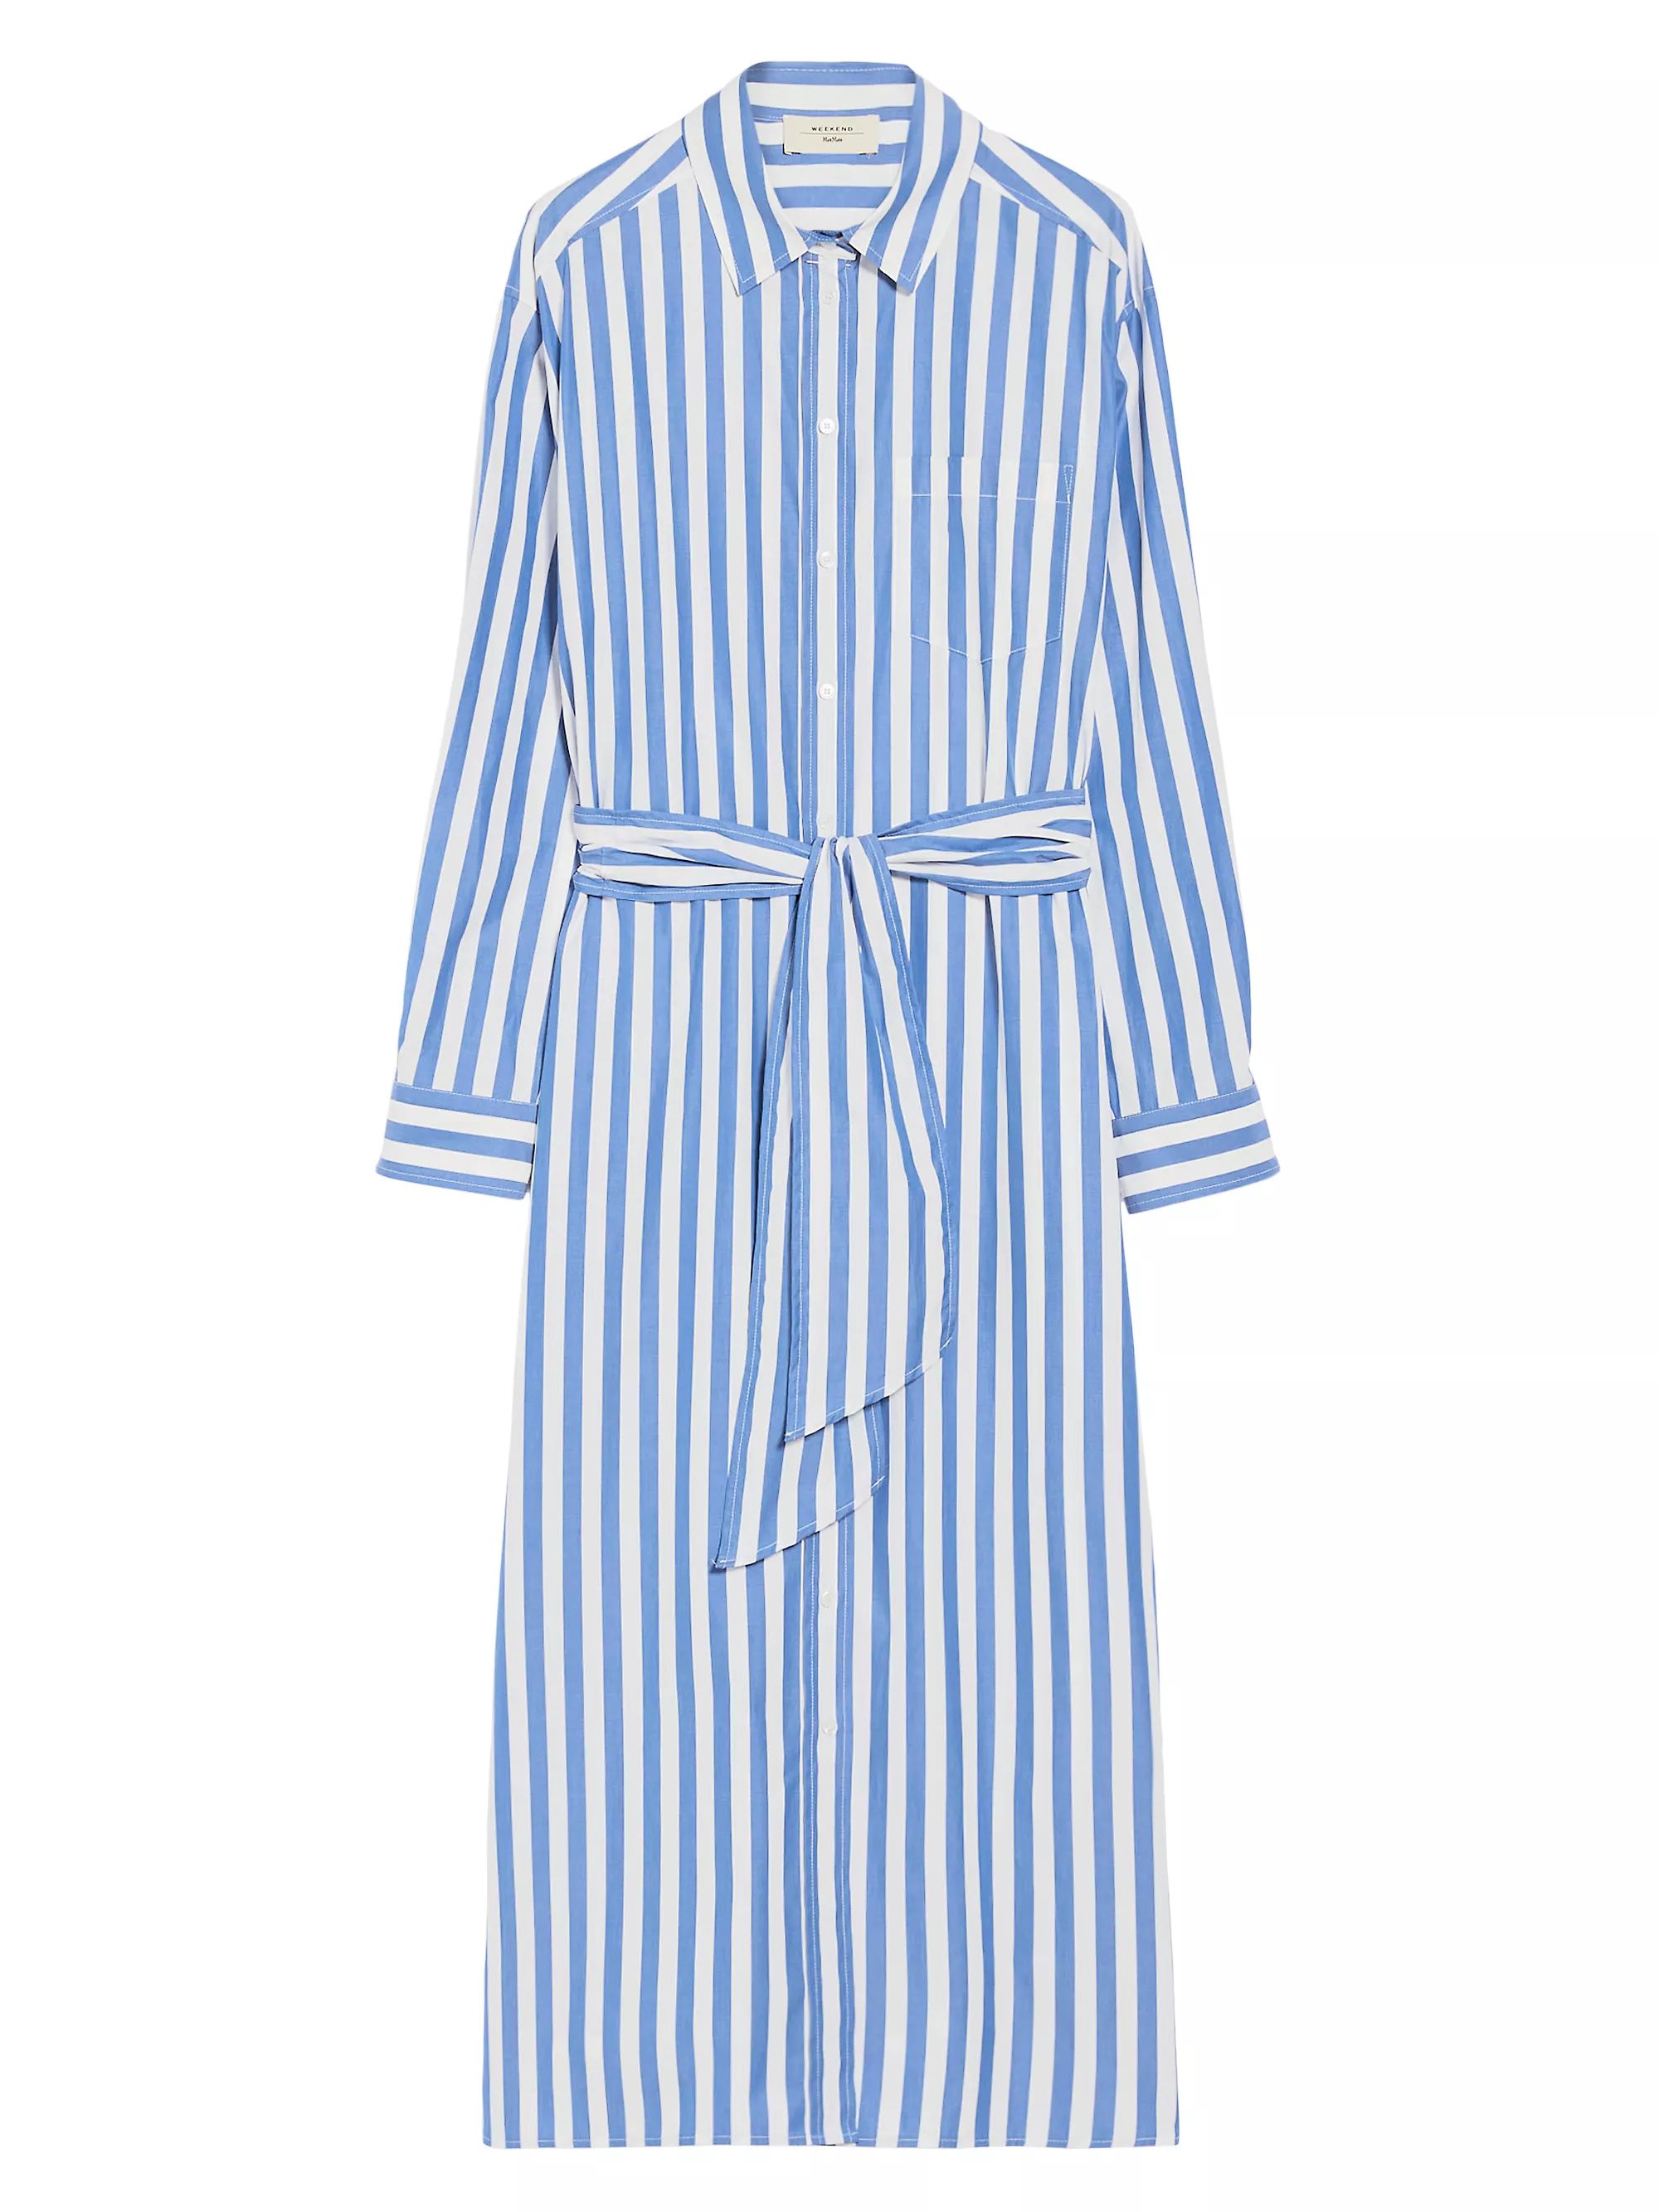 Weekend Max MaraFalasco Striped Cotton Shirtdress | Saks Fifth Avenue